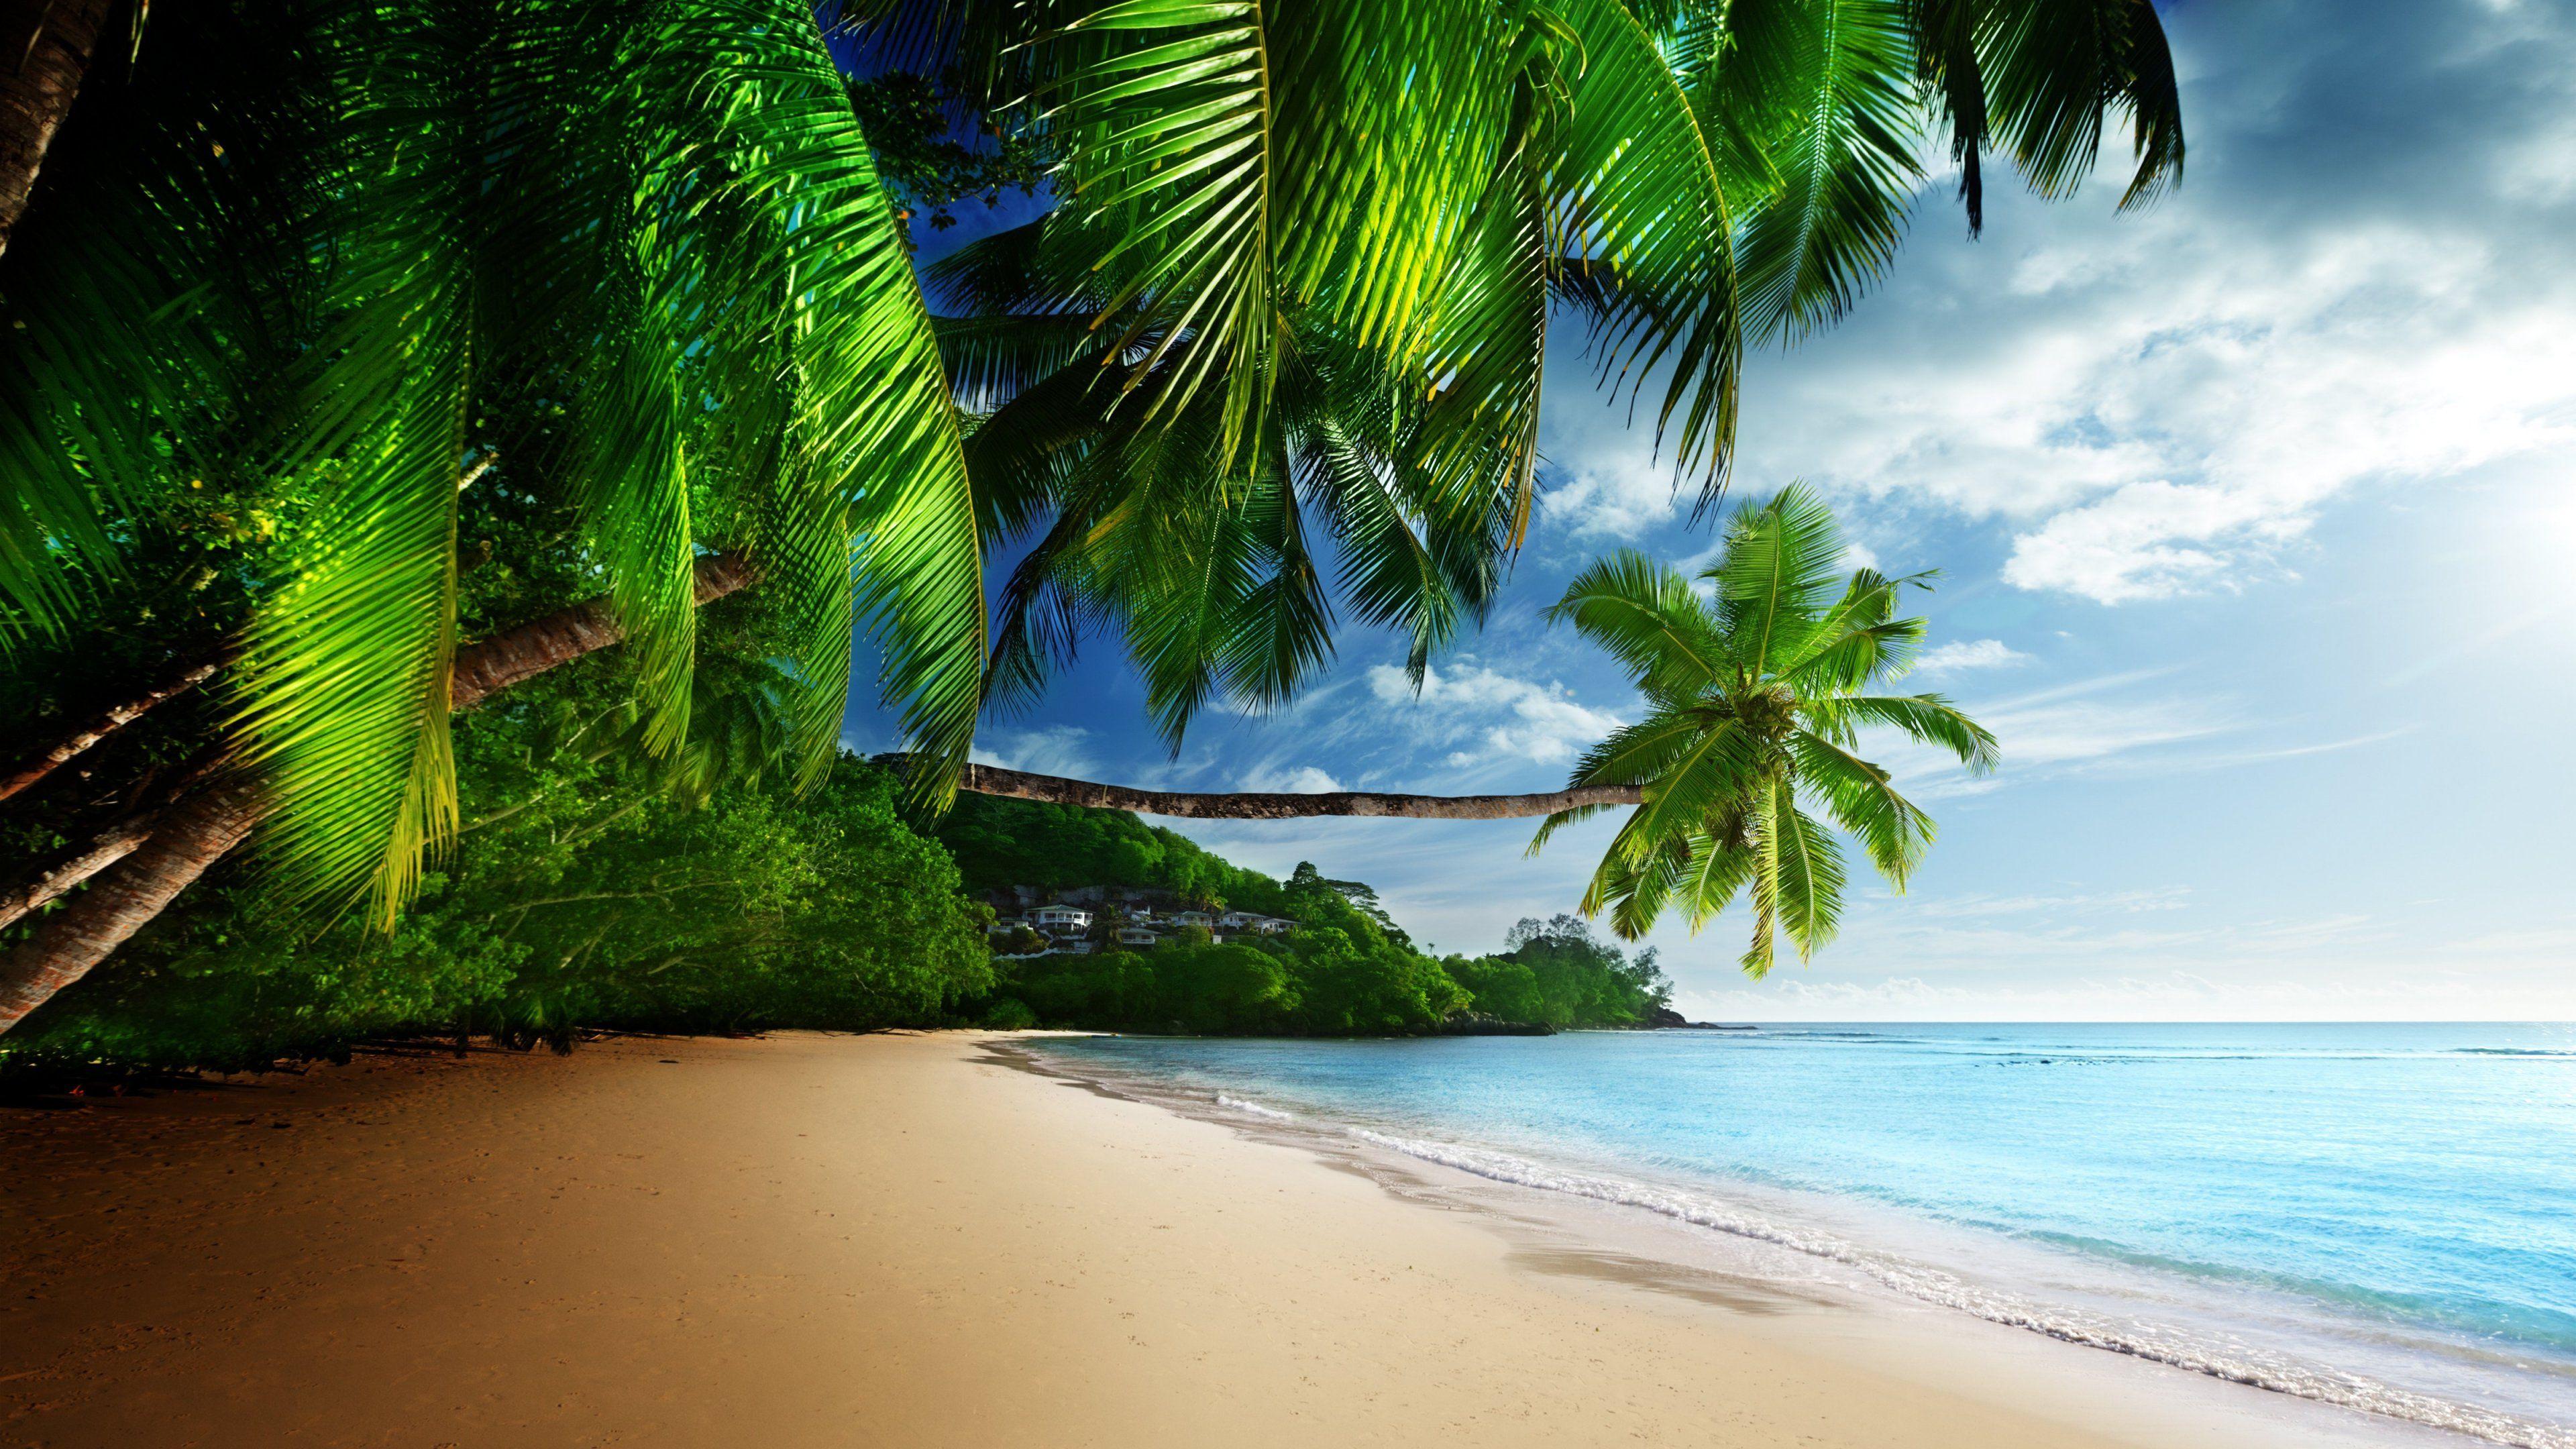 4K Ultra HD Beach Desktop Wallpapers - Top Free 4K Ultra HD Beach